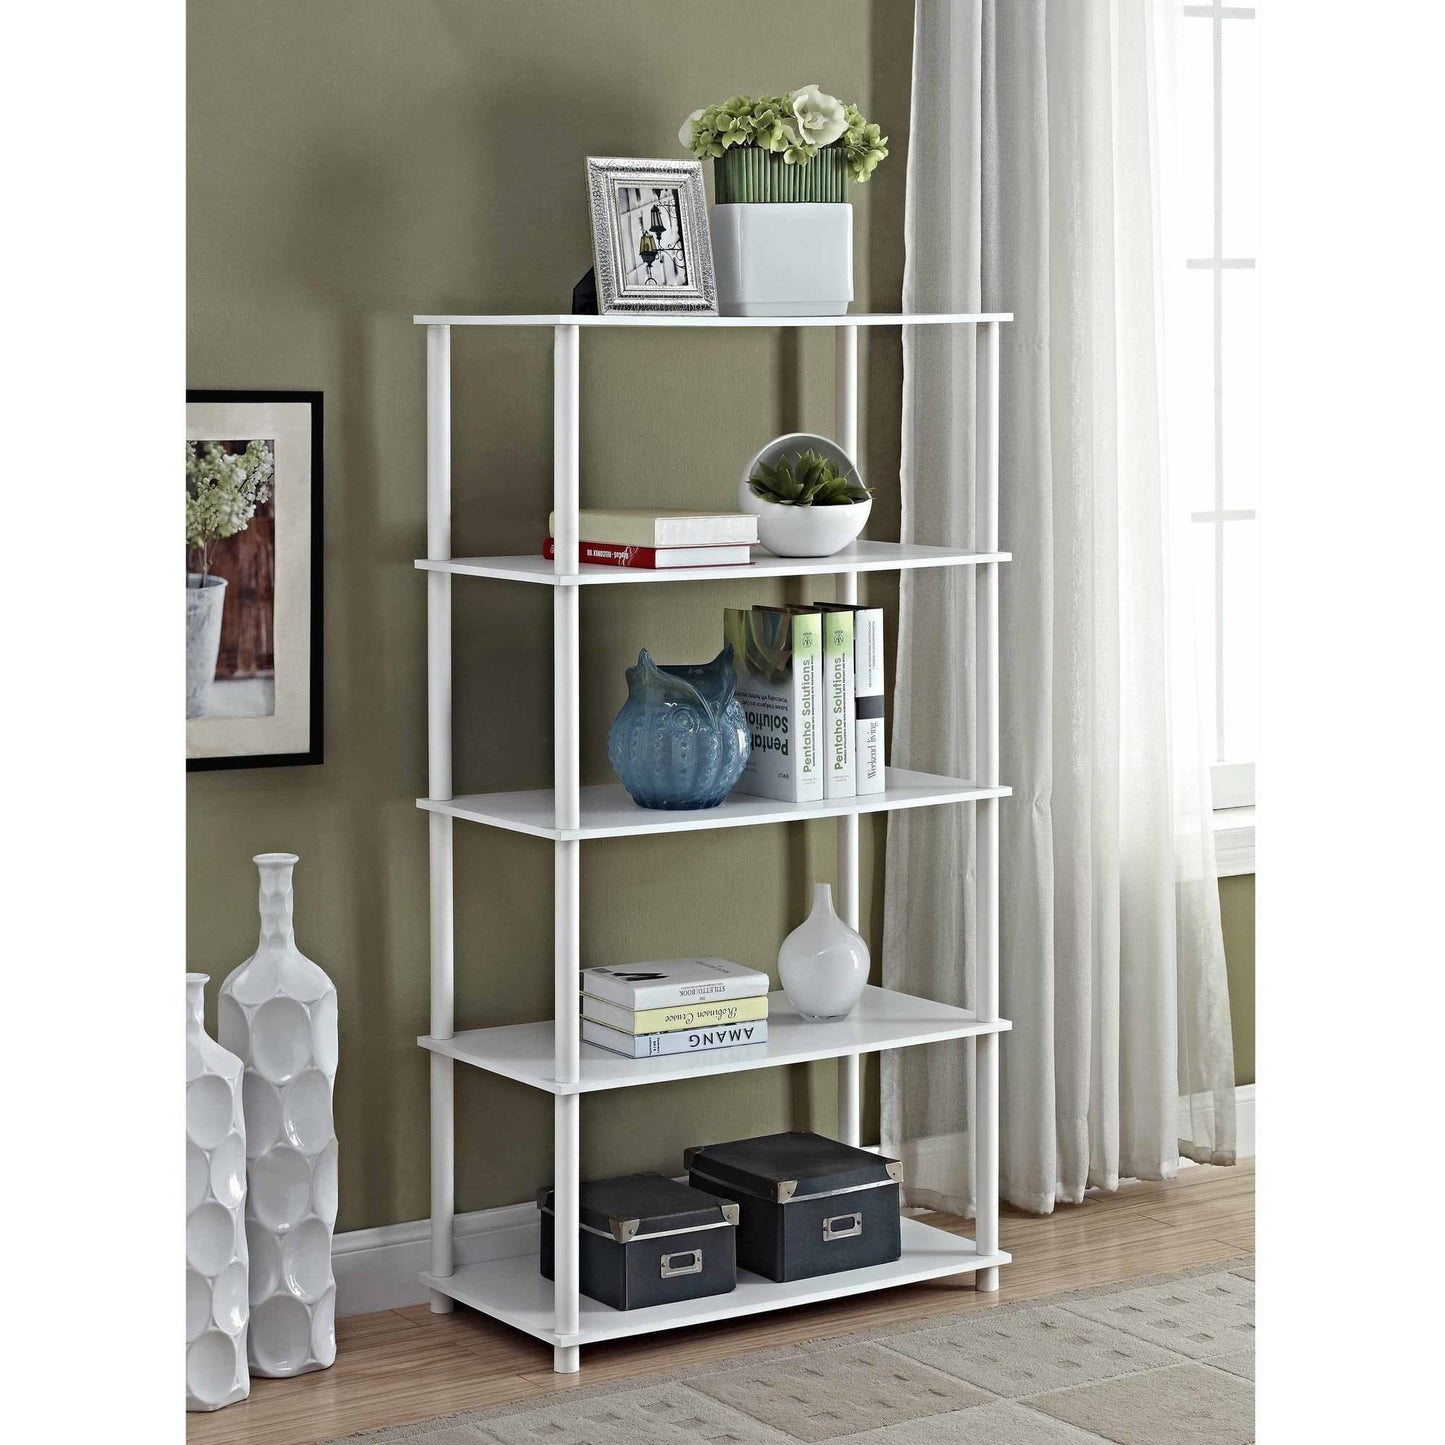 Mainstays No Tools 5-Shelf Storage Bookcase, White bookcase